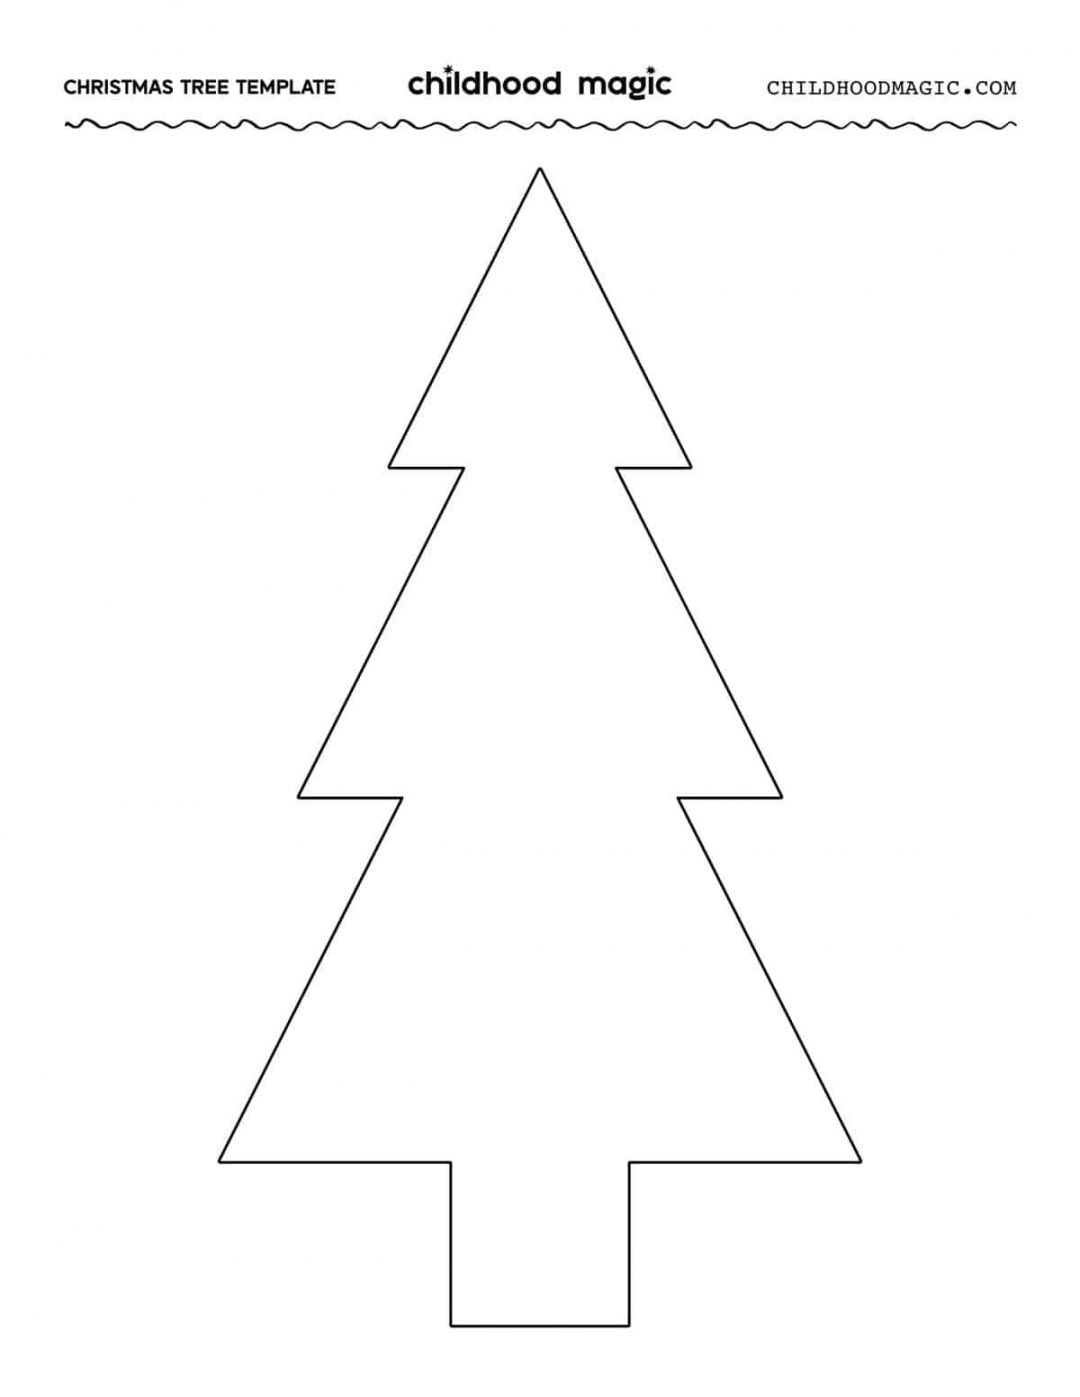 Christmas Tree Template - Free Printables - Childhood Magic - FREE Printables - Christmas Tree Template Free